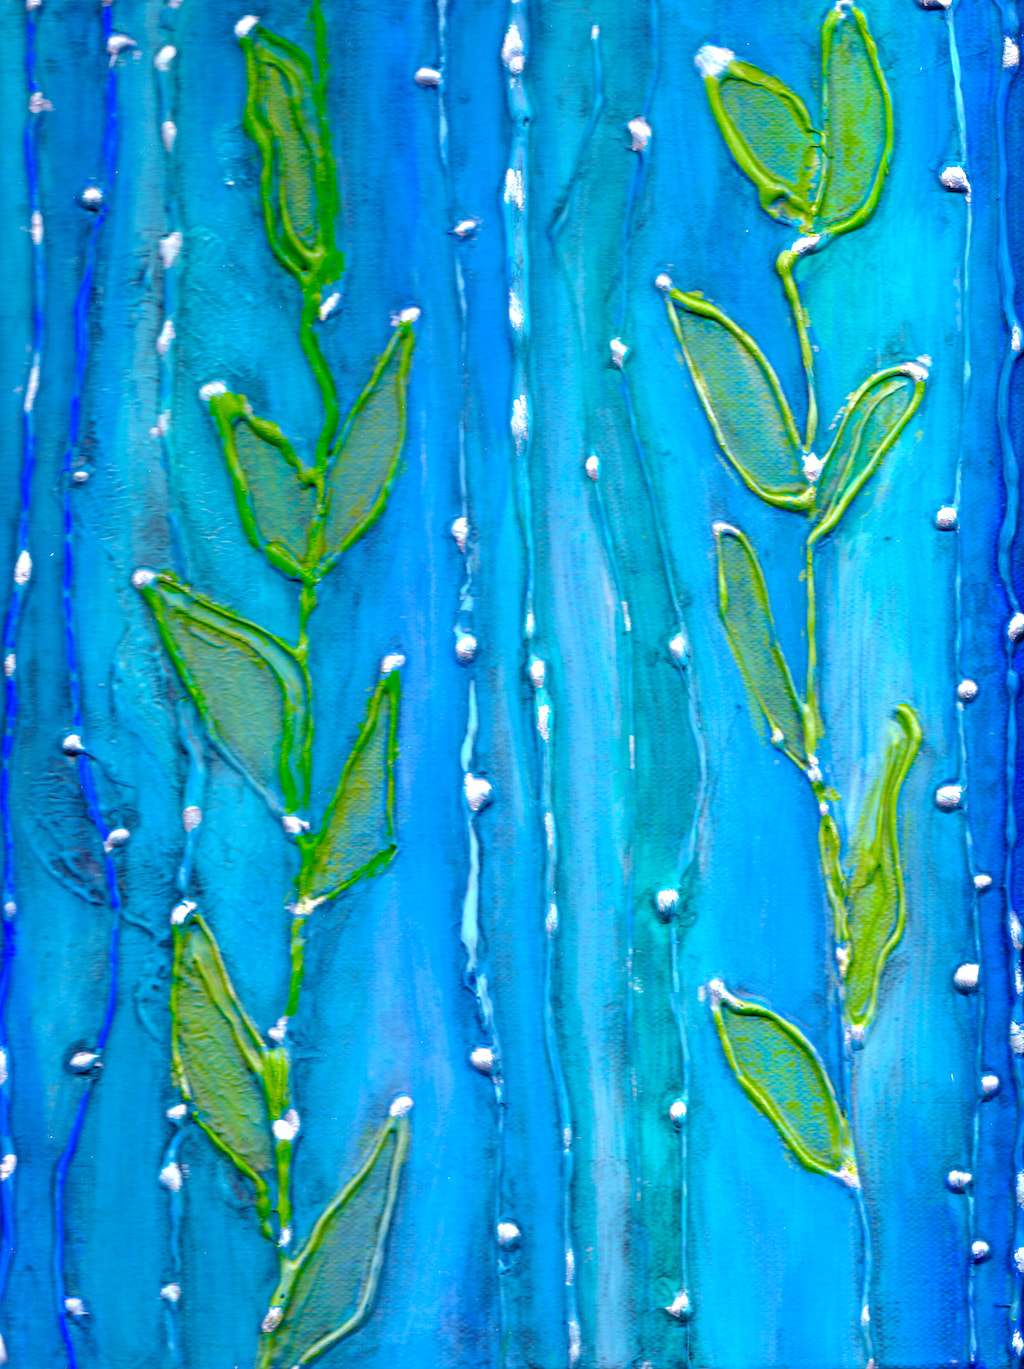 Start Water Color Painting Now - Sherry Barrett - Dancin' & Doodlin